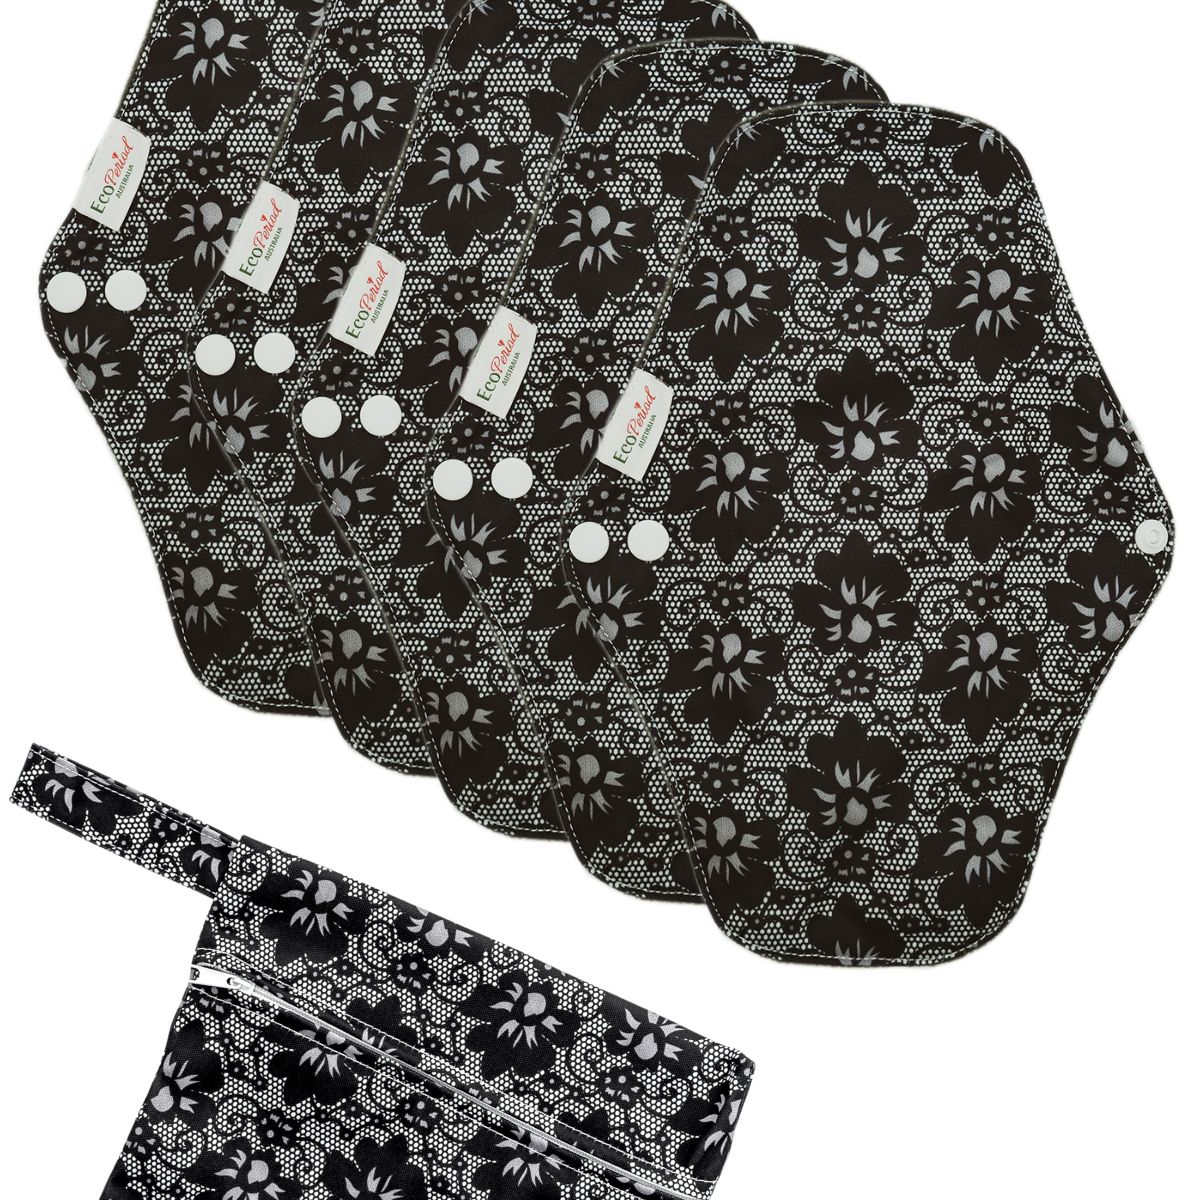 5 five black printed pads 